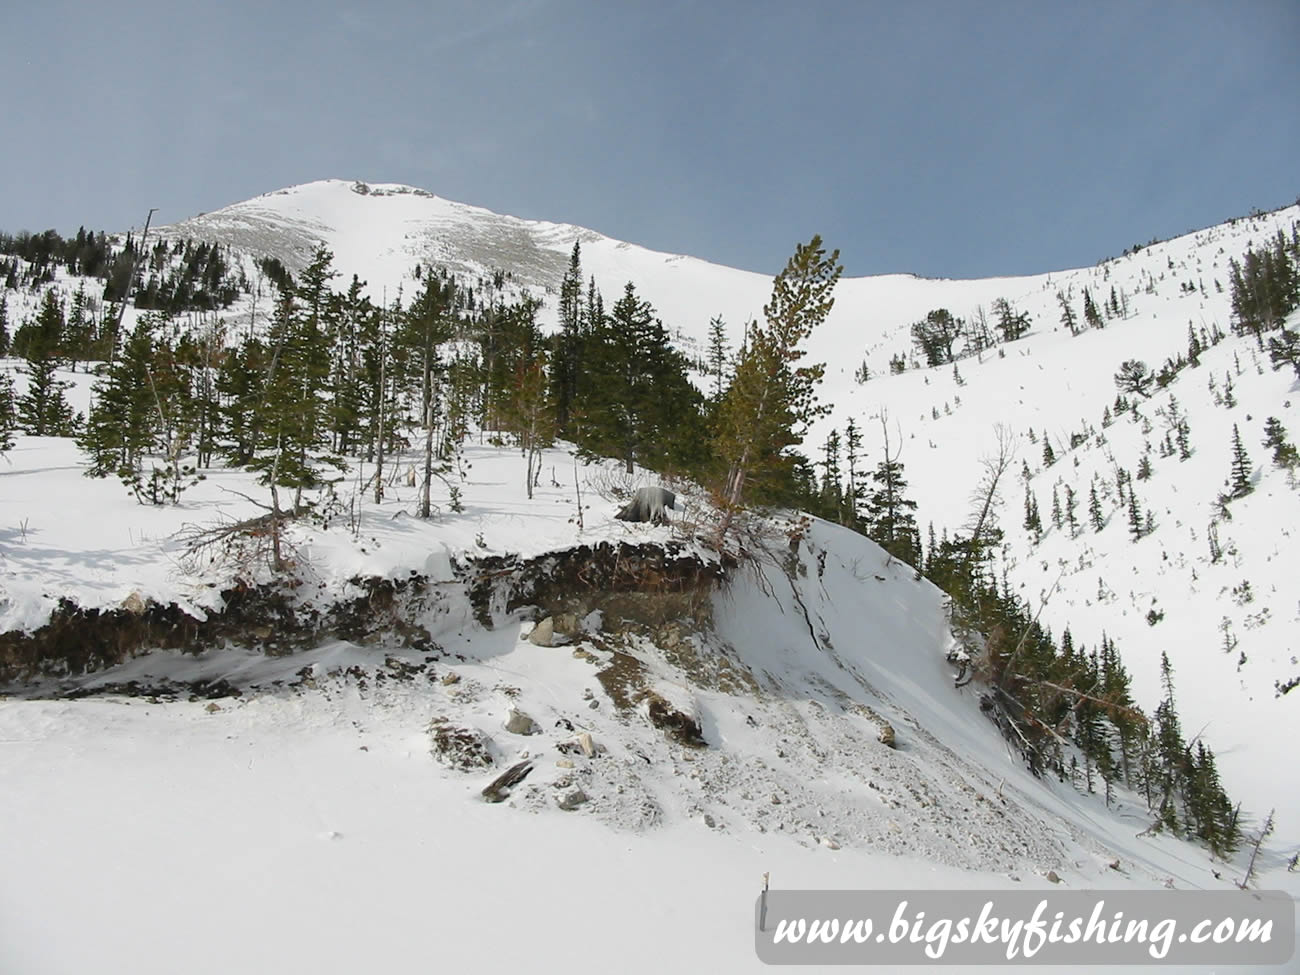 Mt. Lockhart at Teton Pass Ski Area